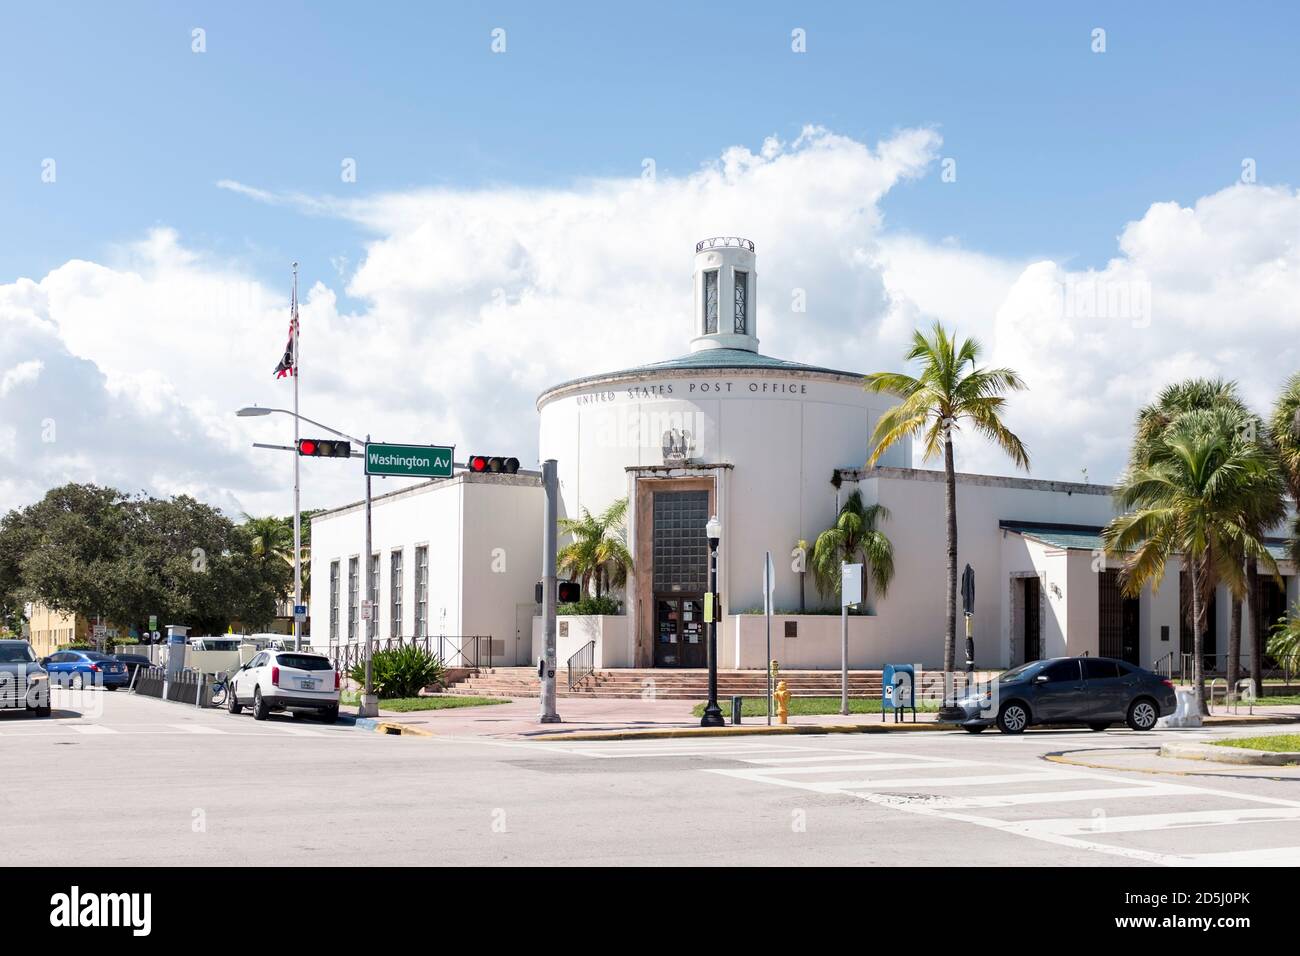 Facade of United States Post Office building on Washington Avenue, Miami. Stock Photo